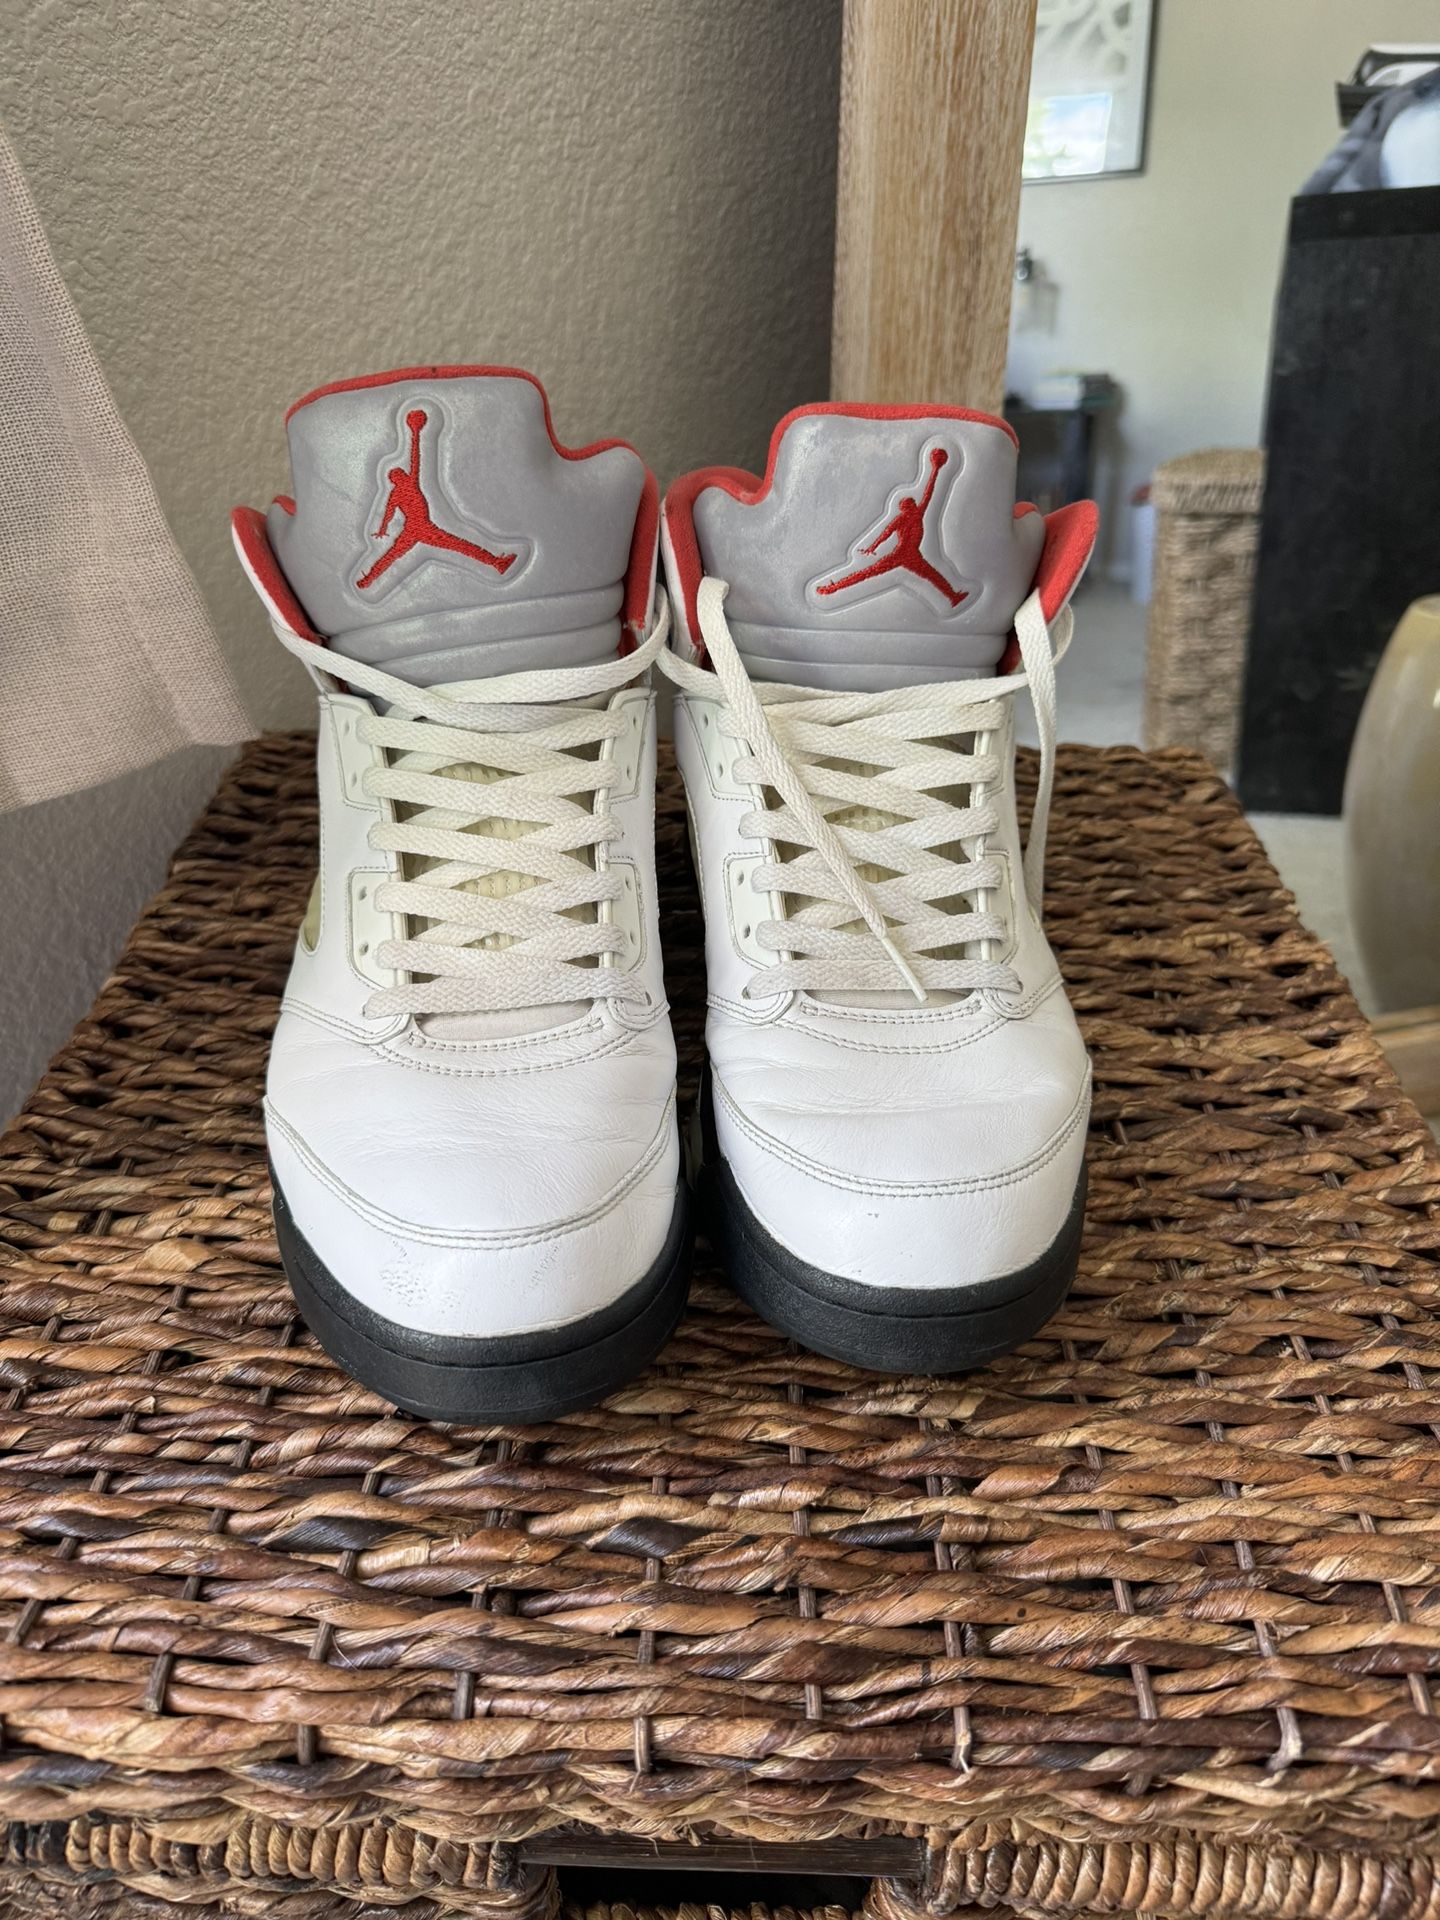 Air Jordan Retro 5 “Fire Red” Size 12